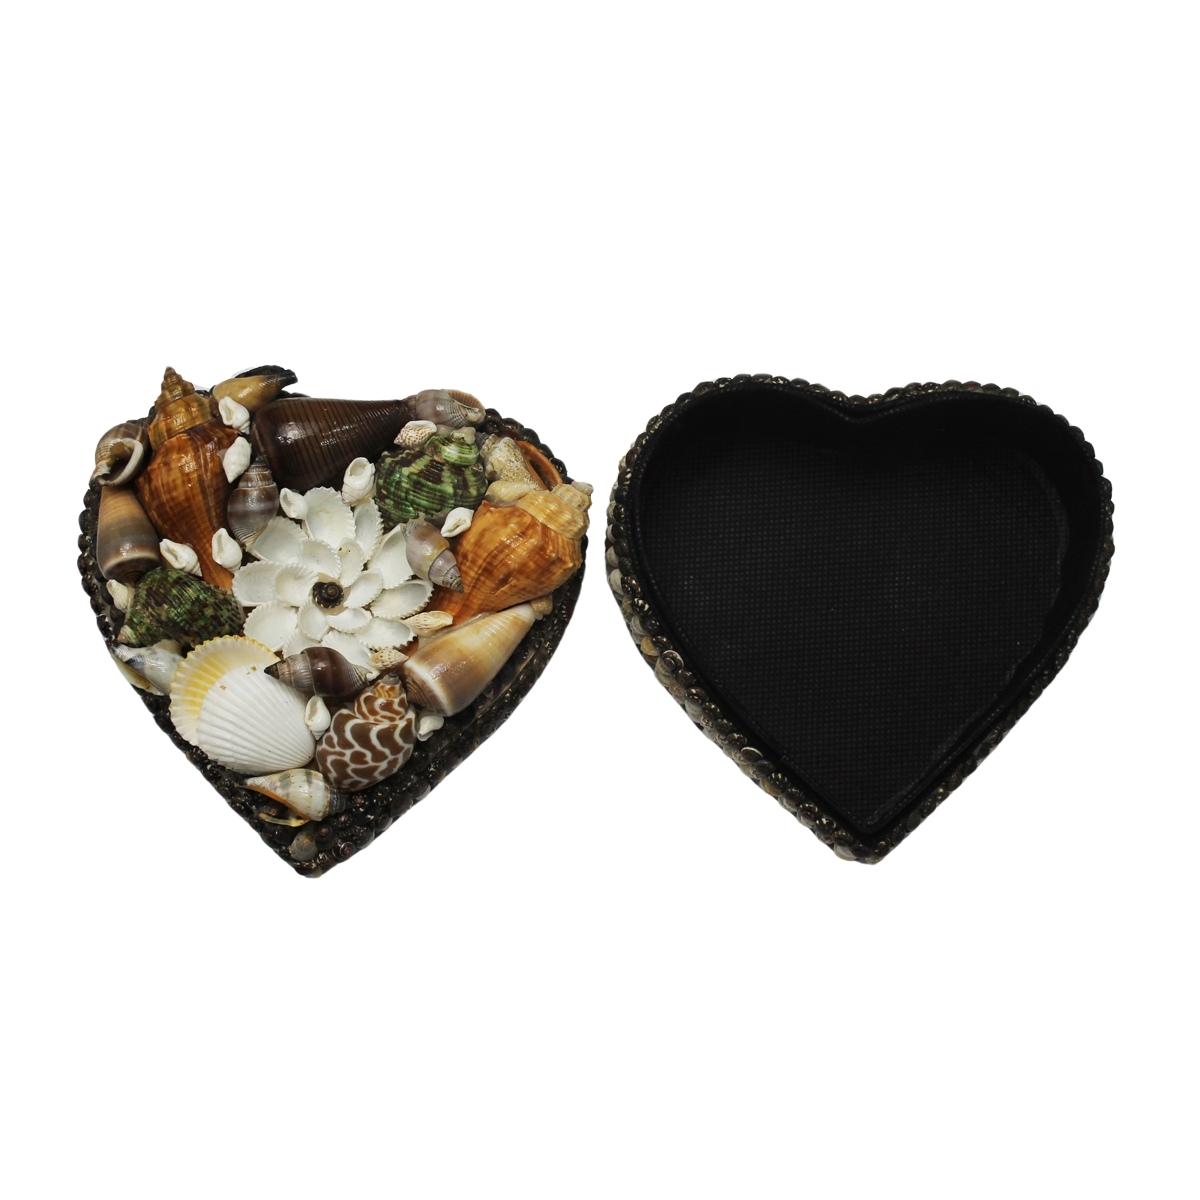 Vintage Heart Shaped Seashell Decorative Jewelry Box Seashell Show Pieces For Home Decor Item-Maya Bazaar